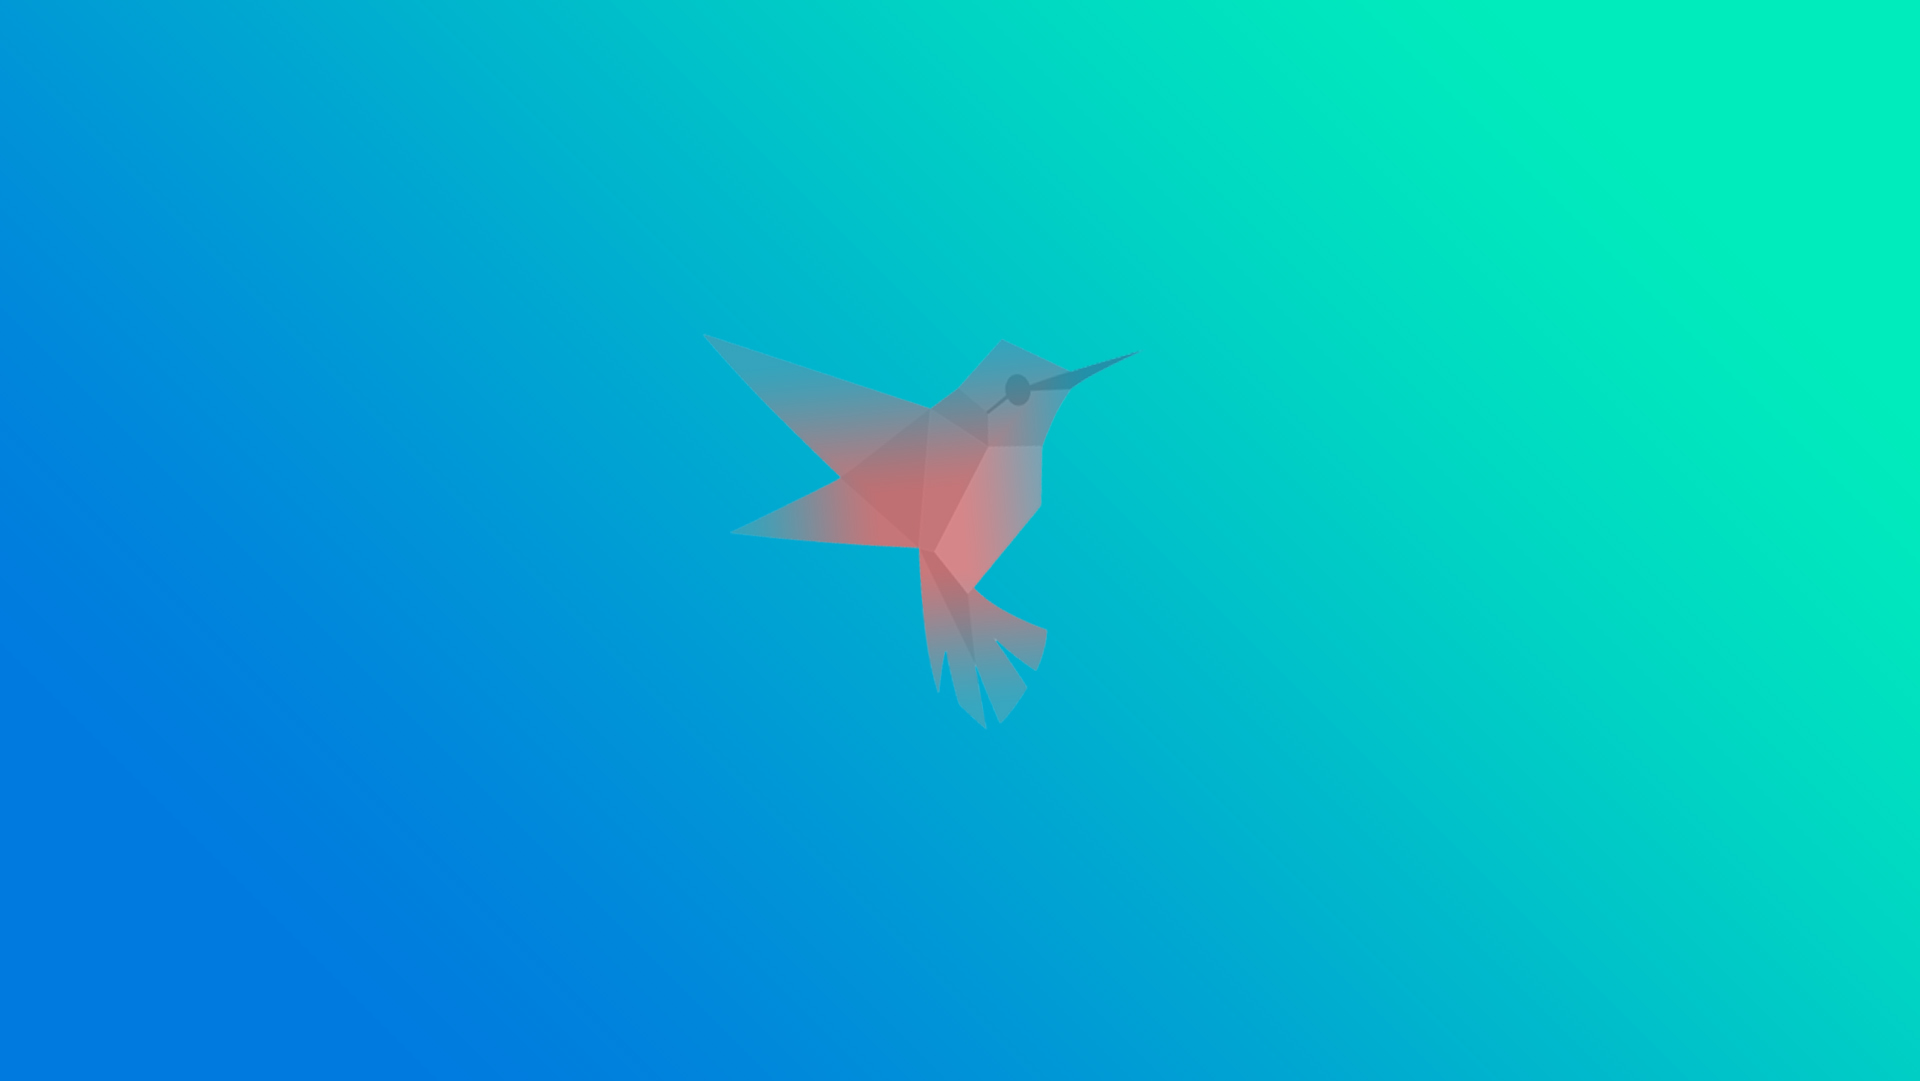 General 1920x1081 Google programming language minimalism hummingbirds blue turquoise cyan gradient anime